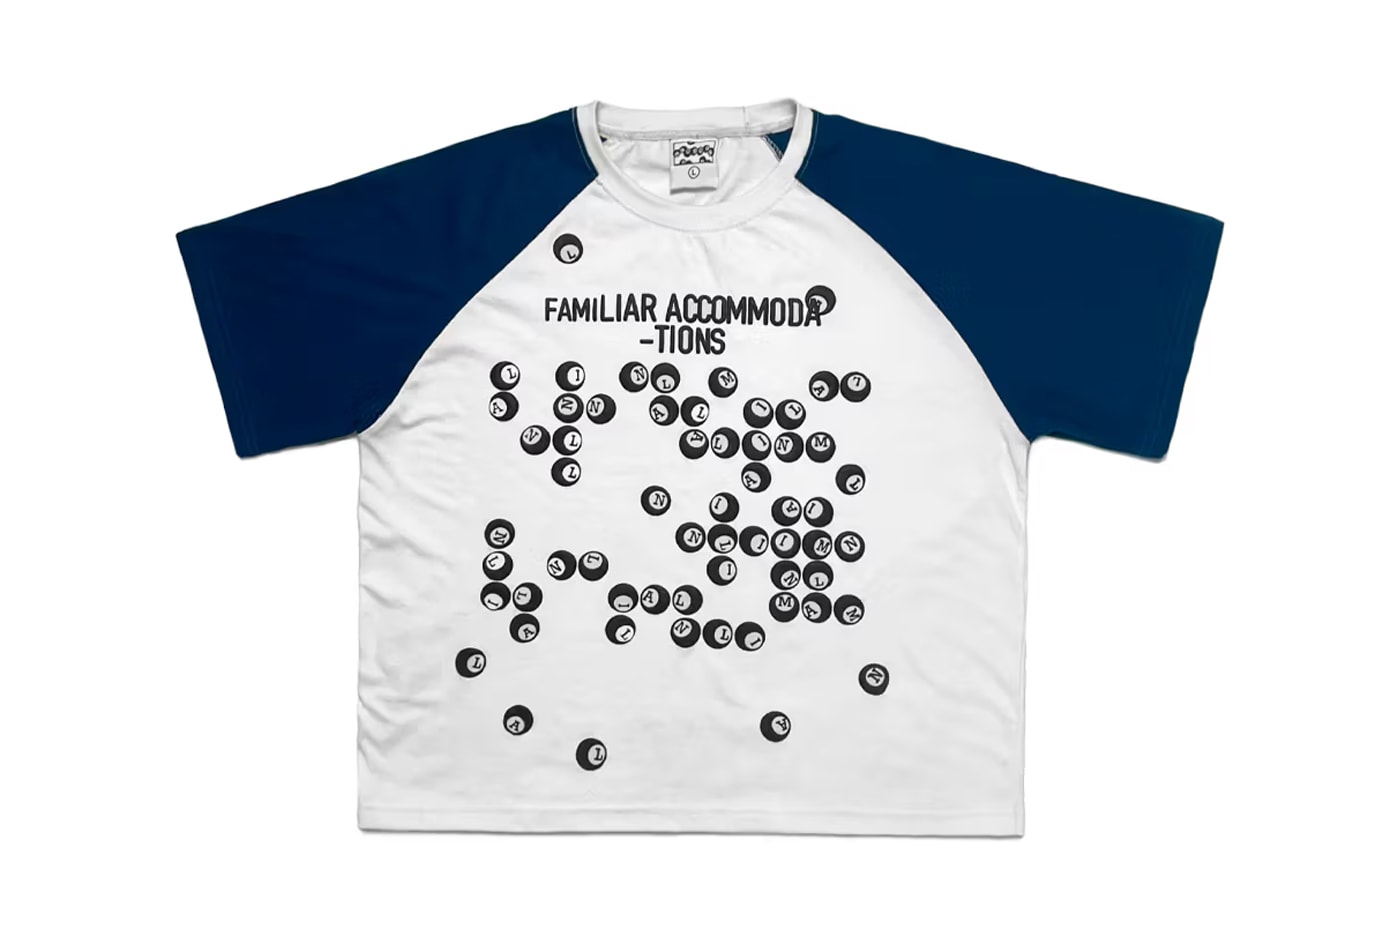 Liminal Work Shop Keyboard Jacket Viral Outwear Scatter Collection Second Drop 02 Pre-Order Online